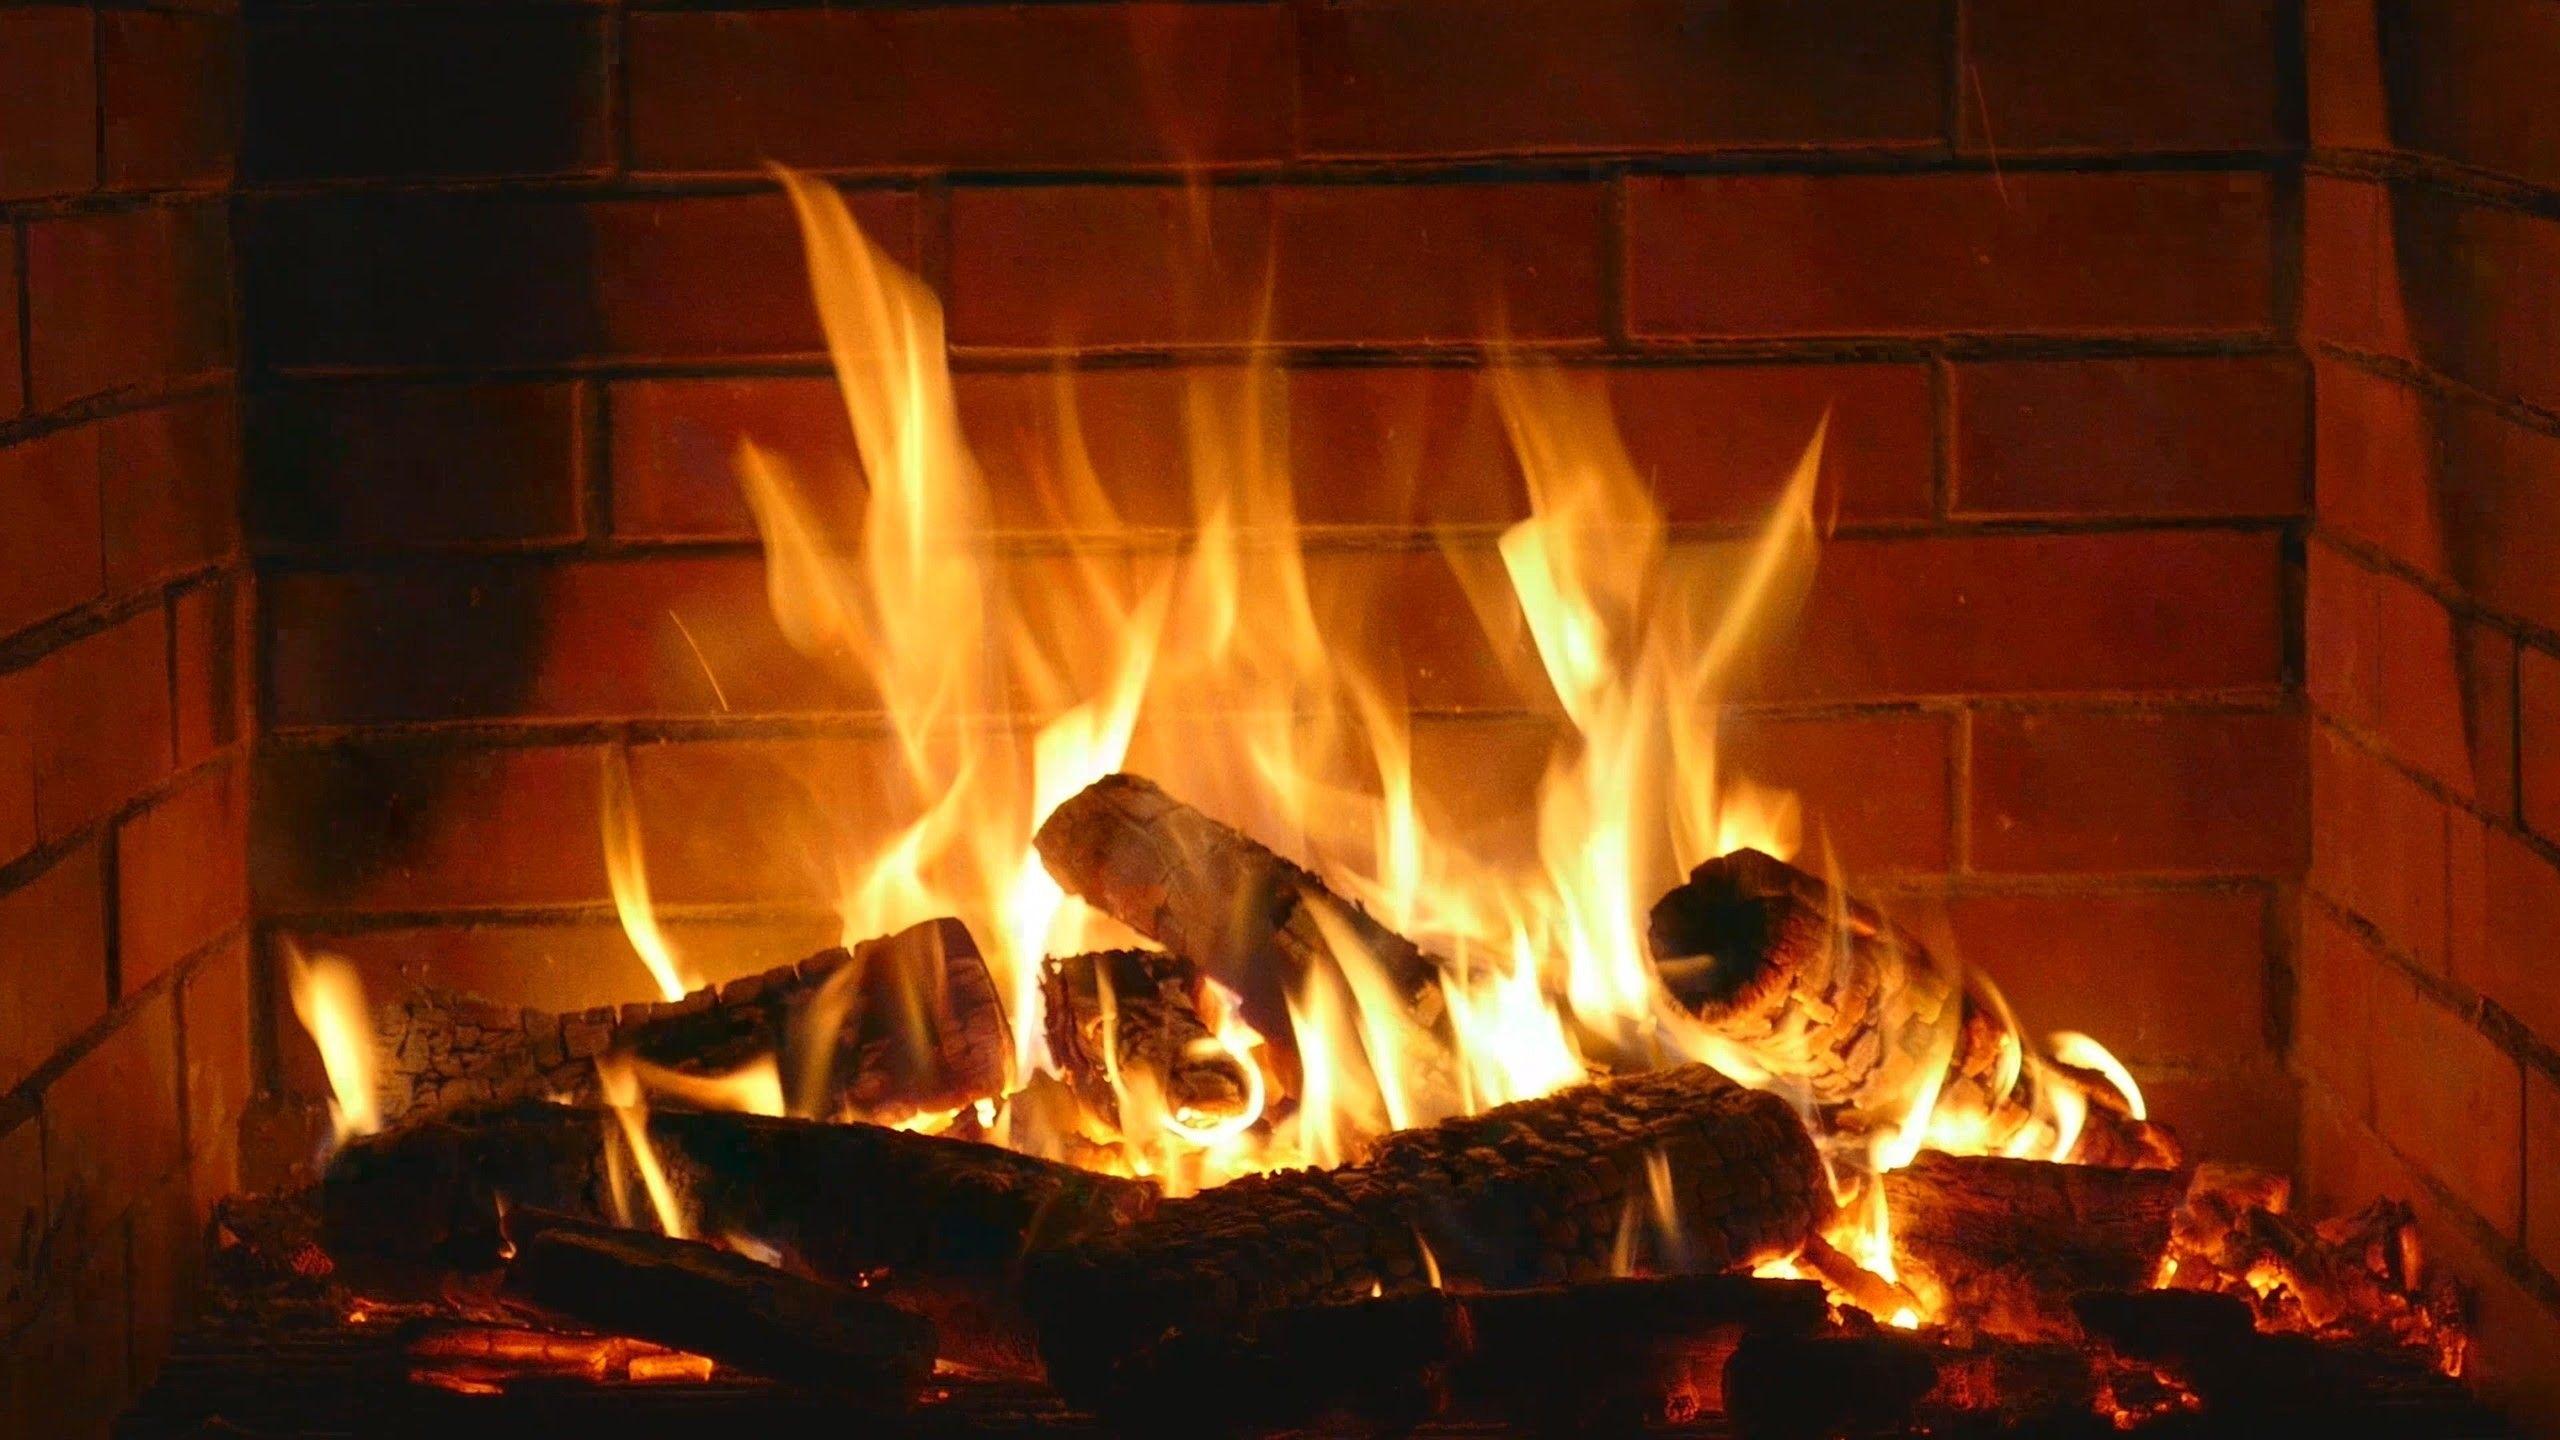 virtual burning fireplace screensaver for pc